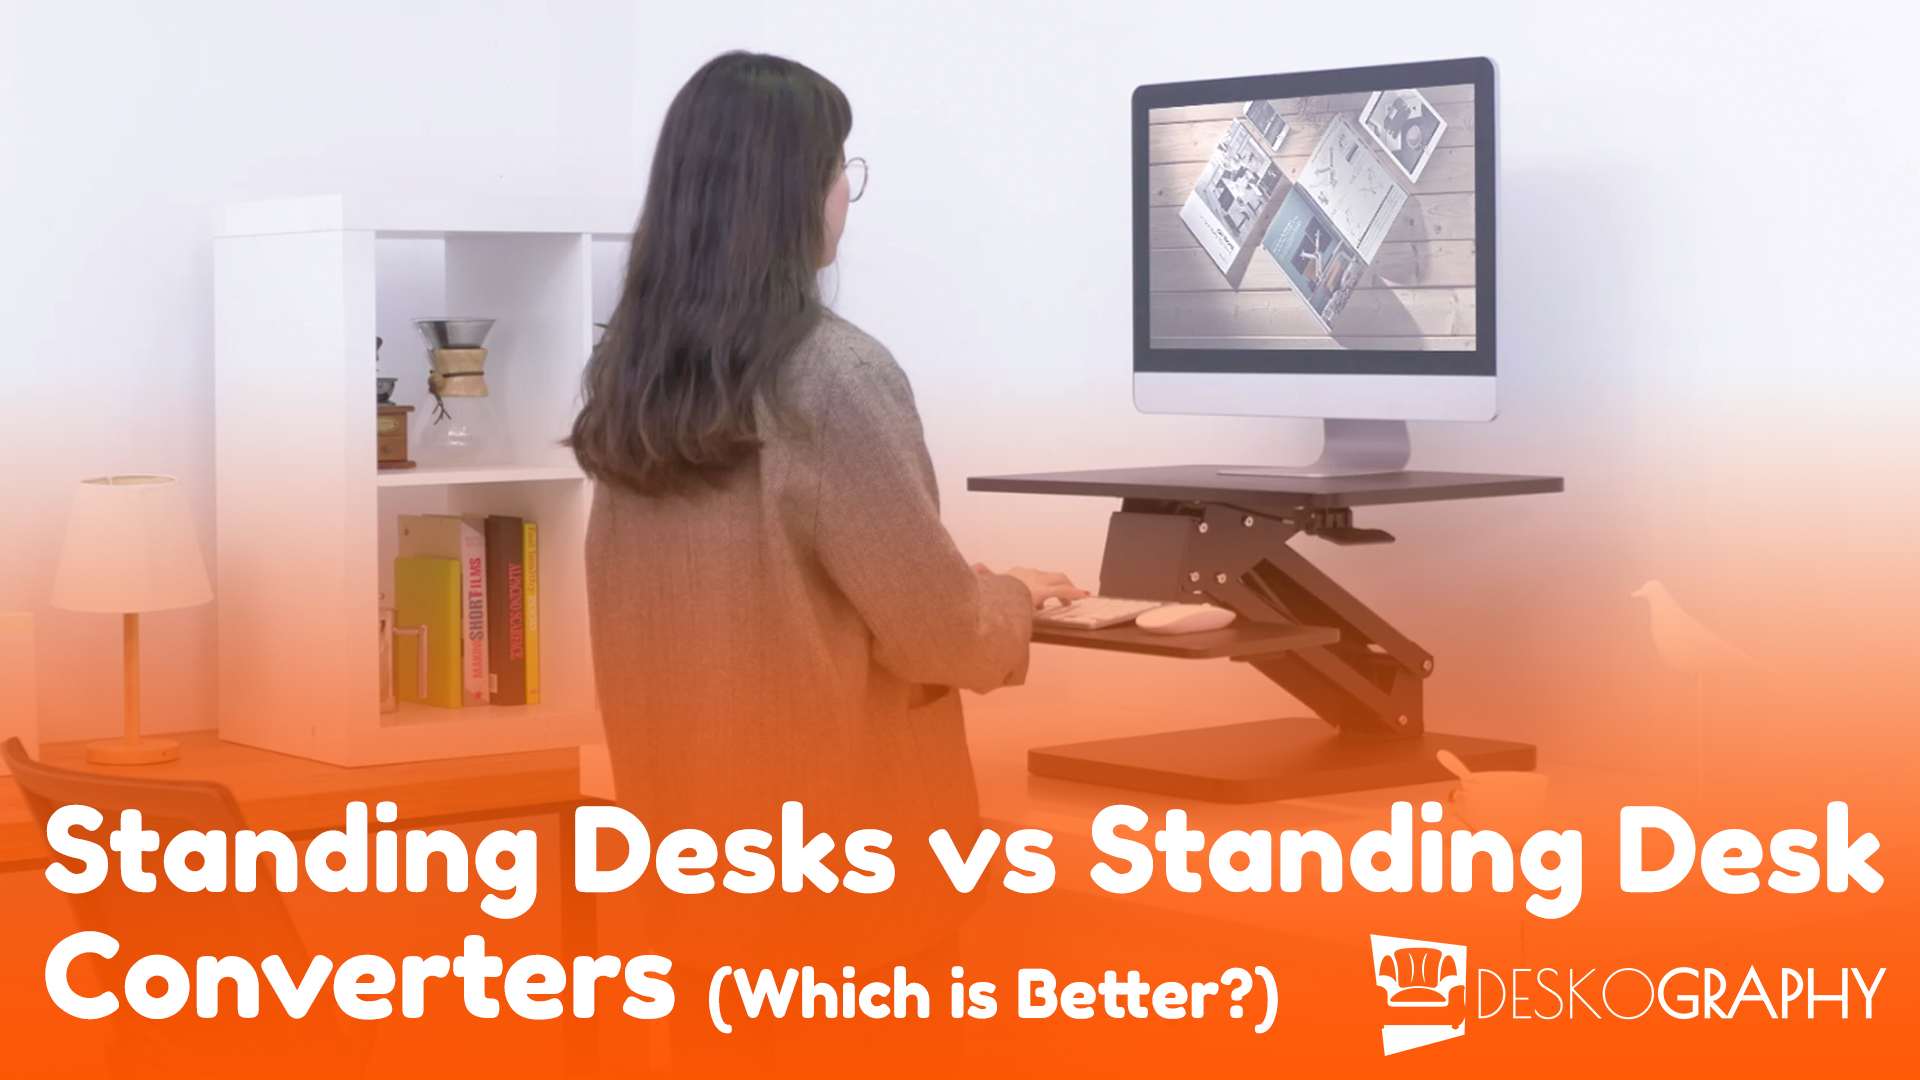 Standing desks vs standing desk converters